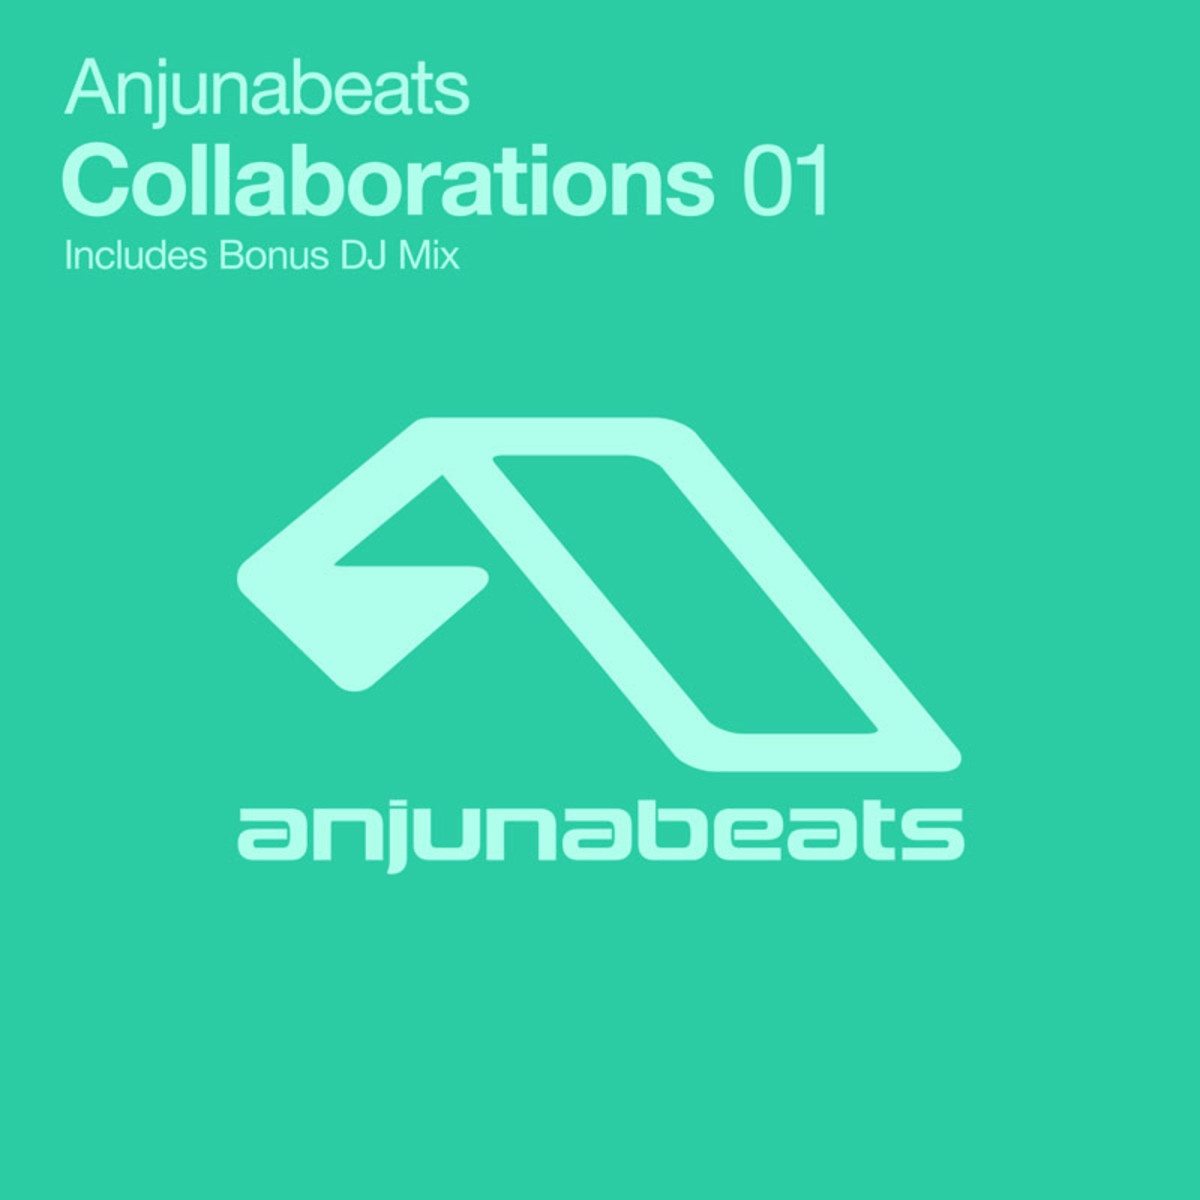 Anjunabeats Collaborations 01